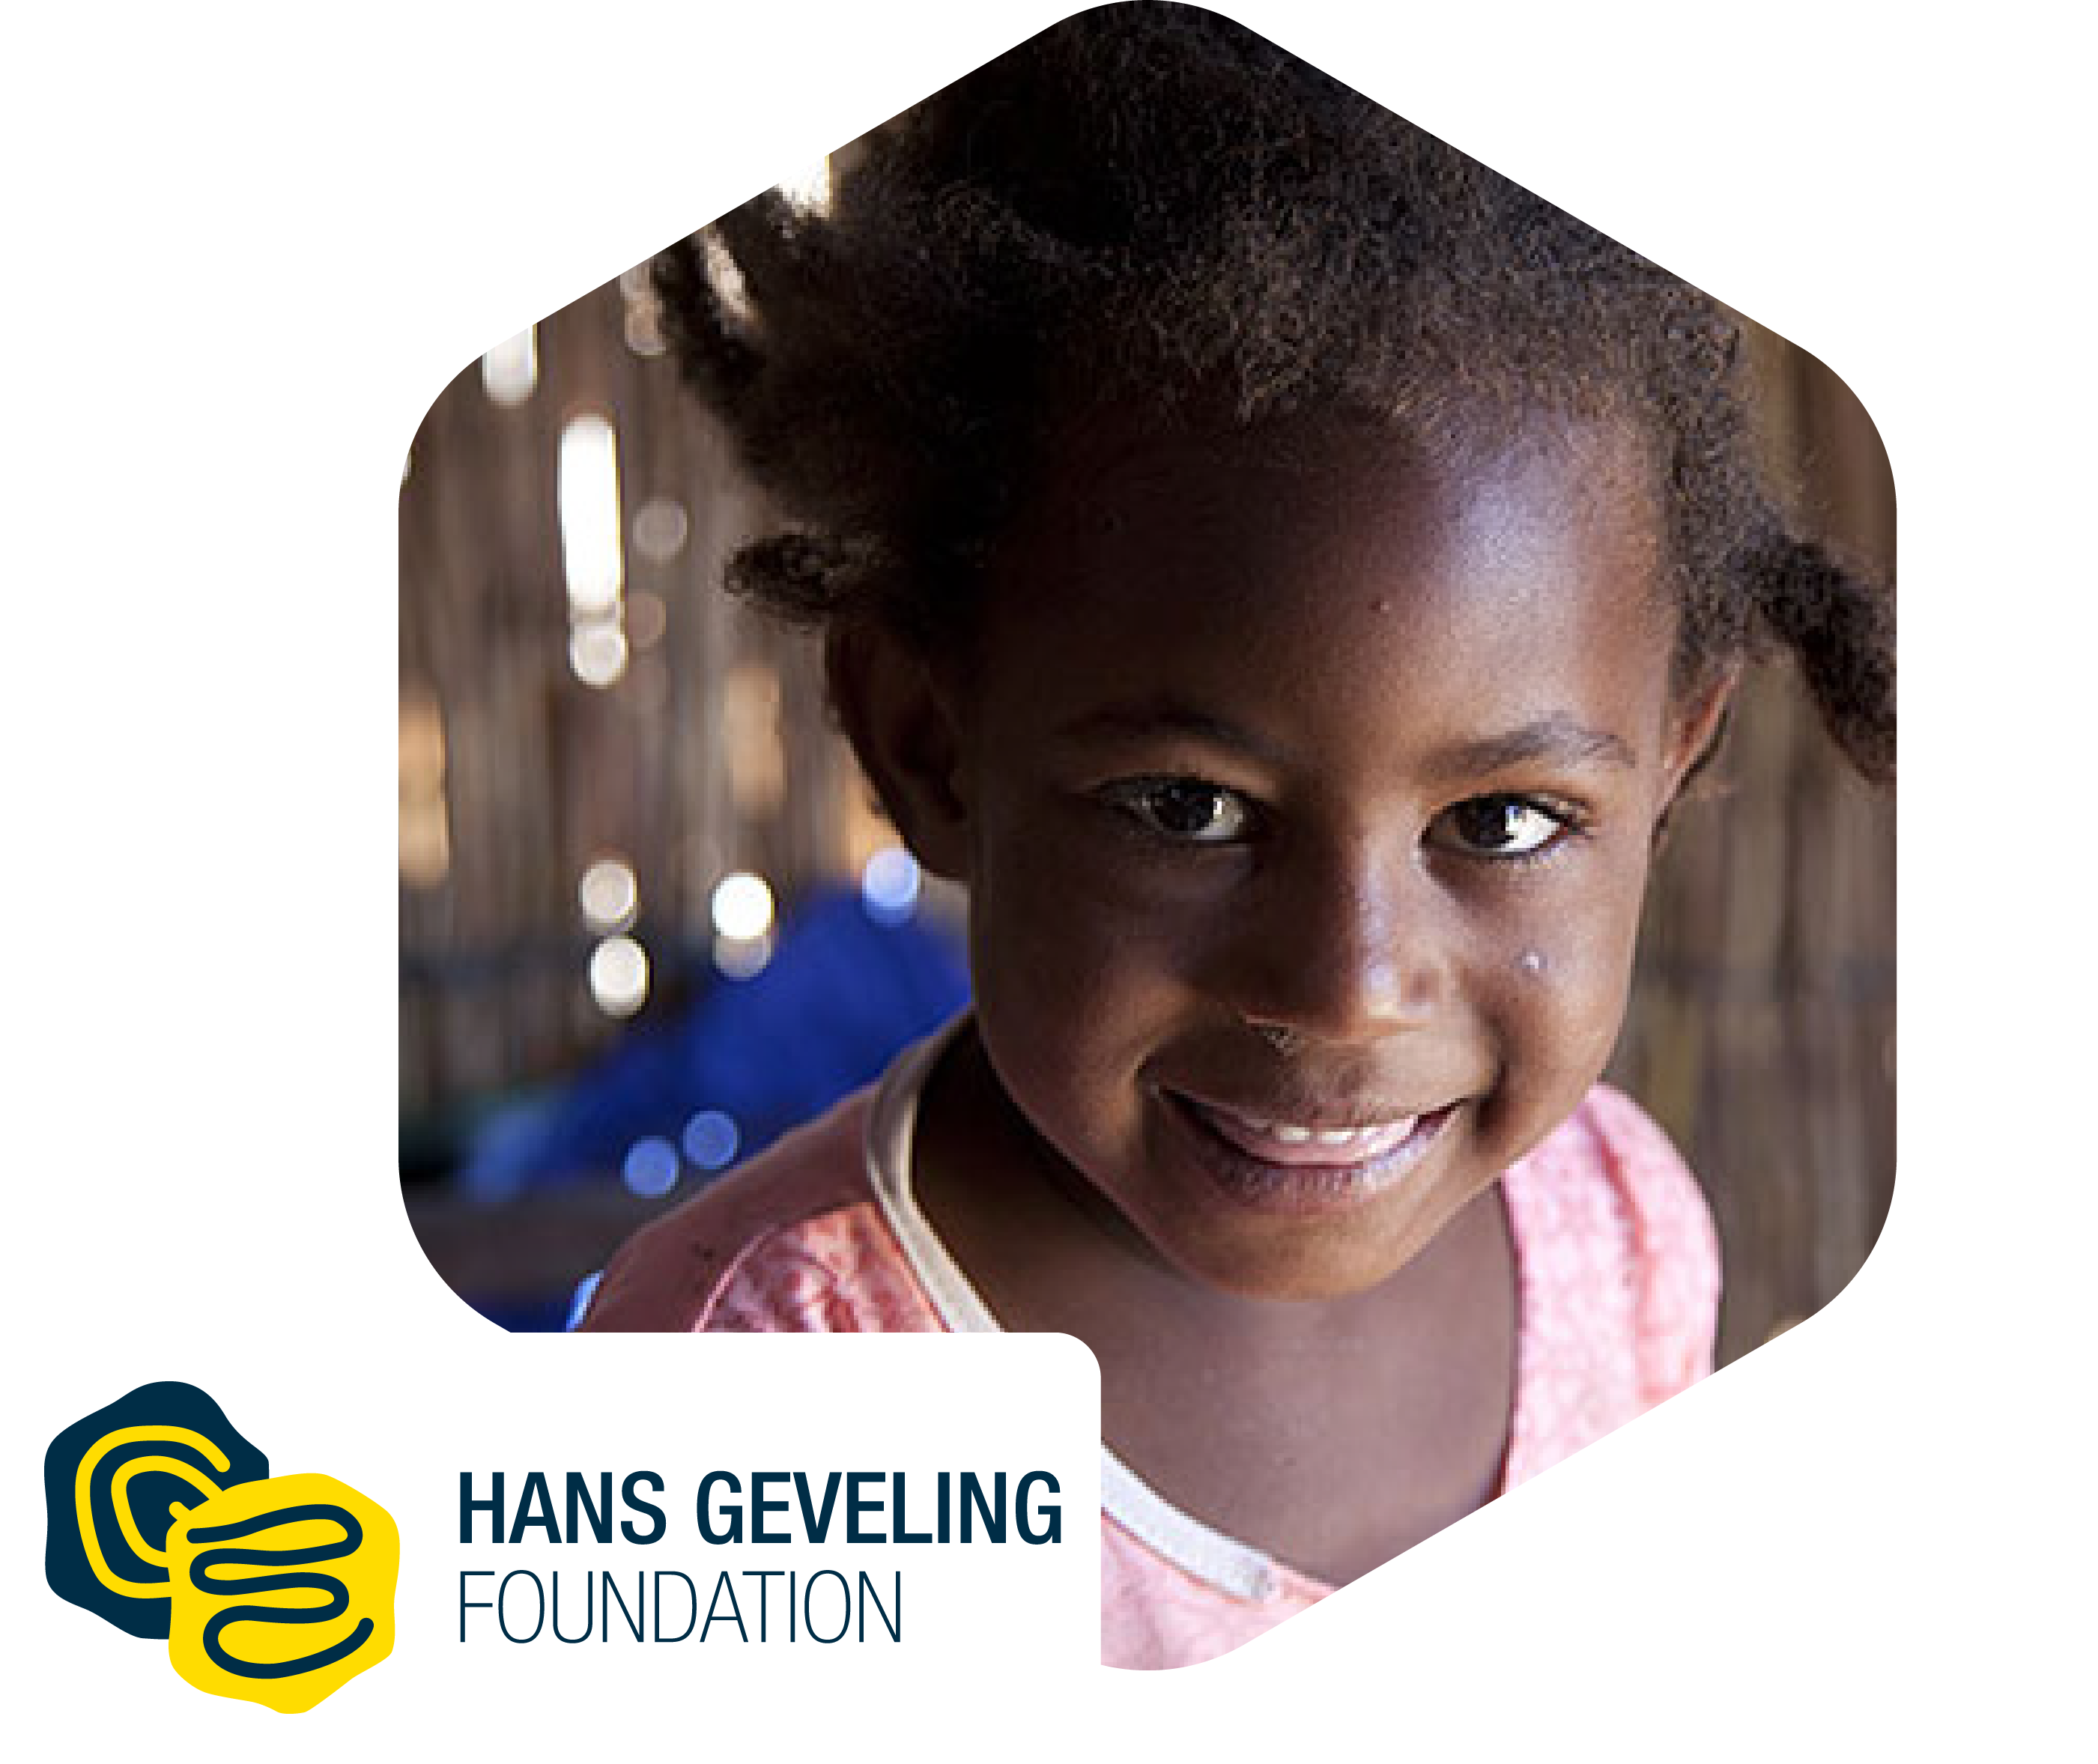 Hans Geveling Foundation